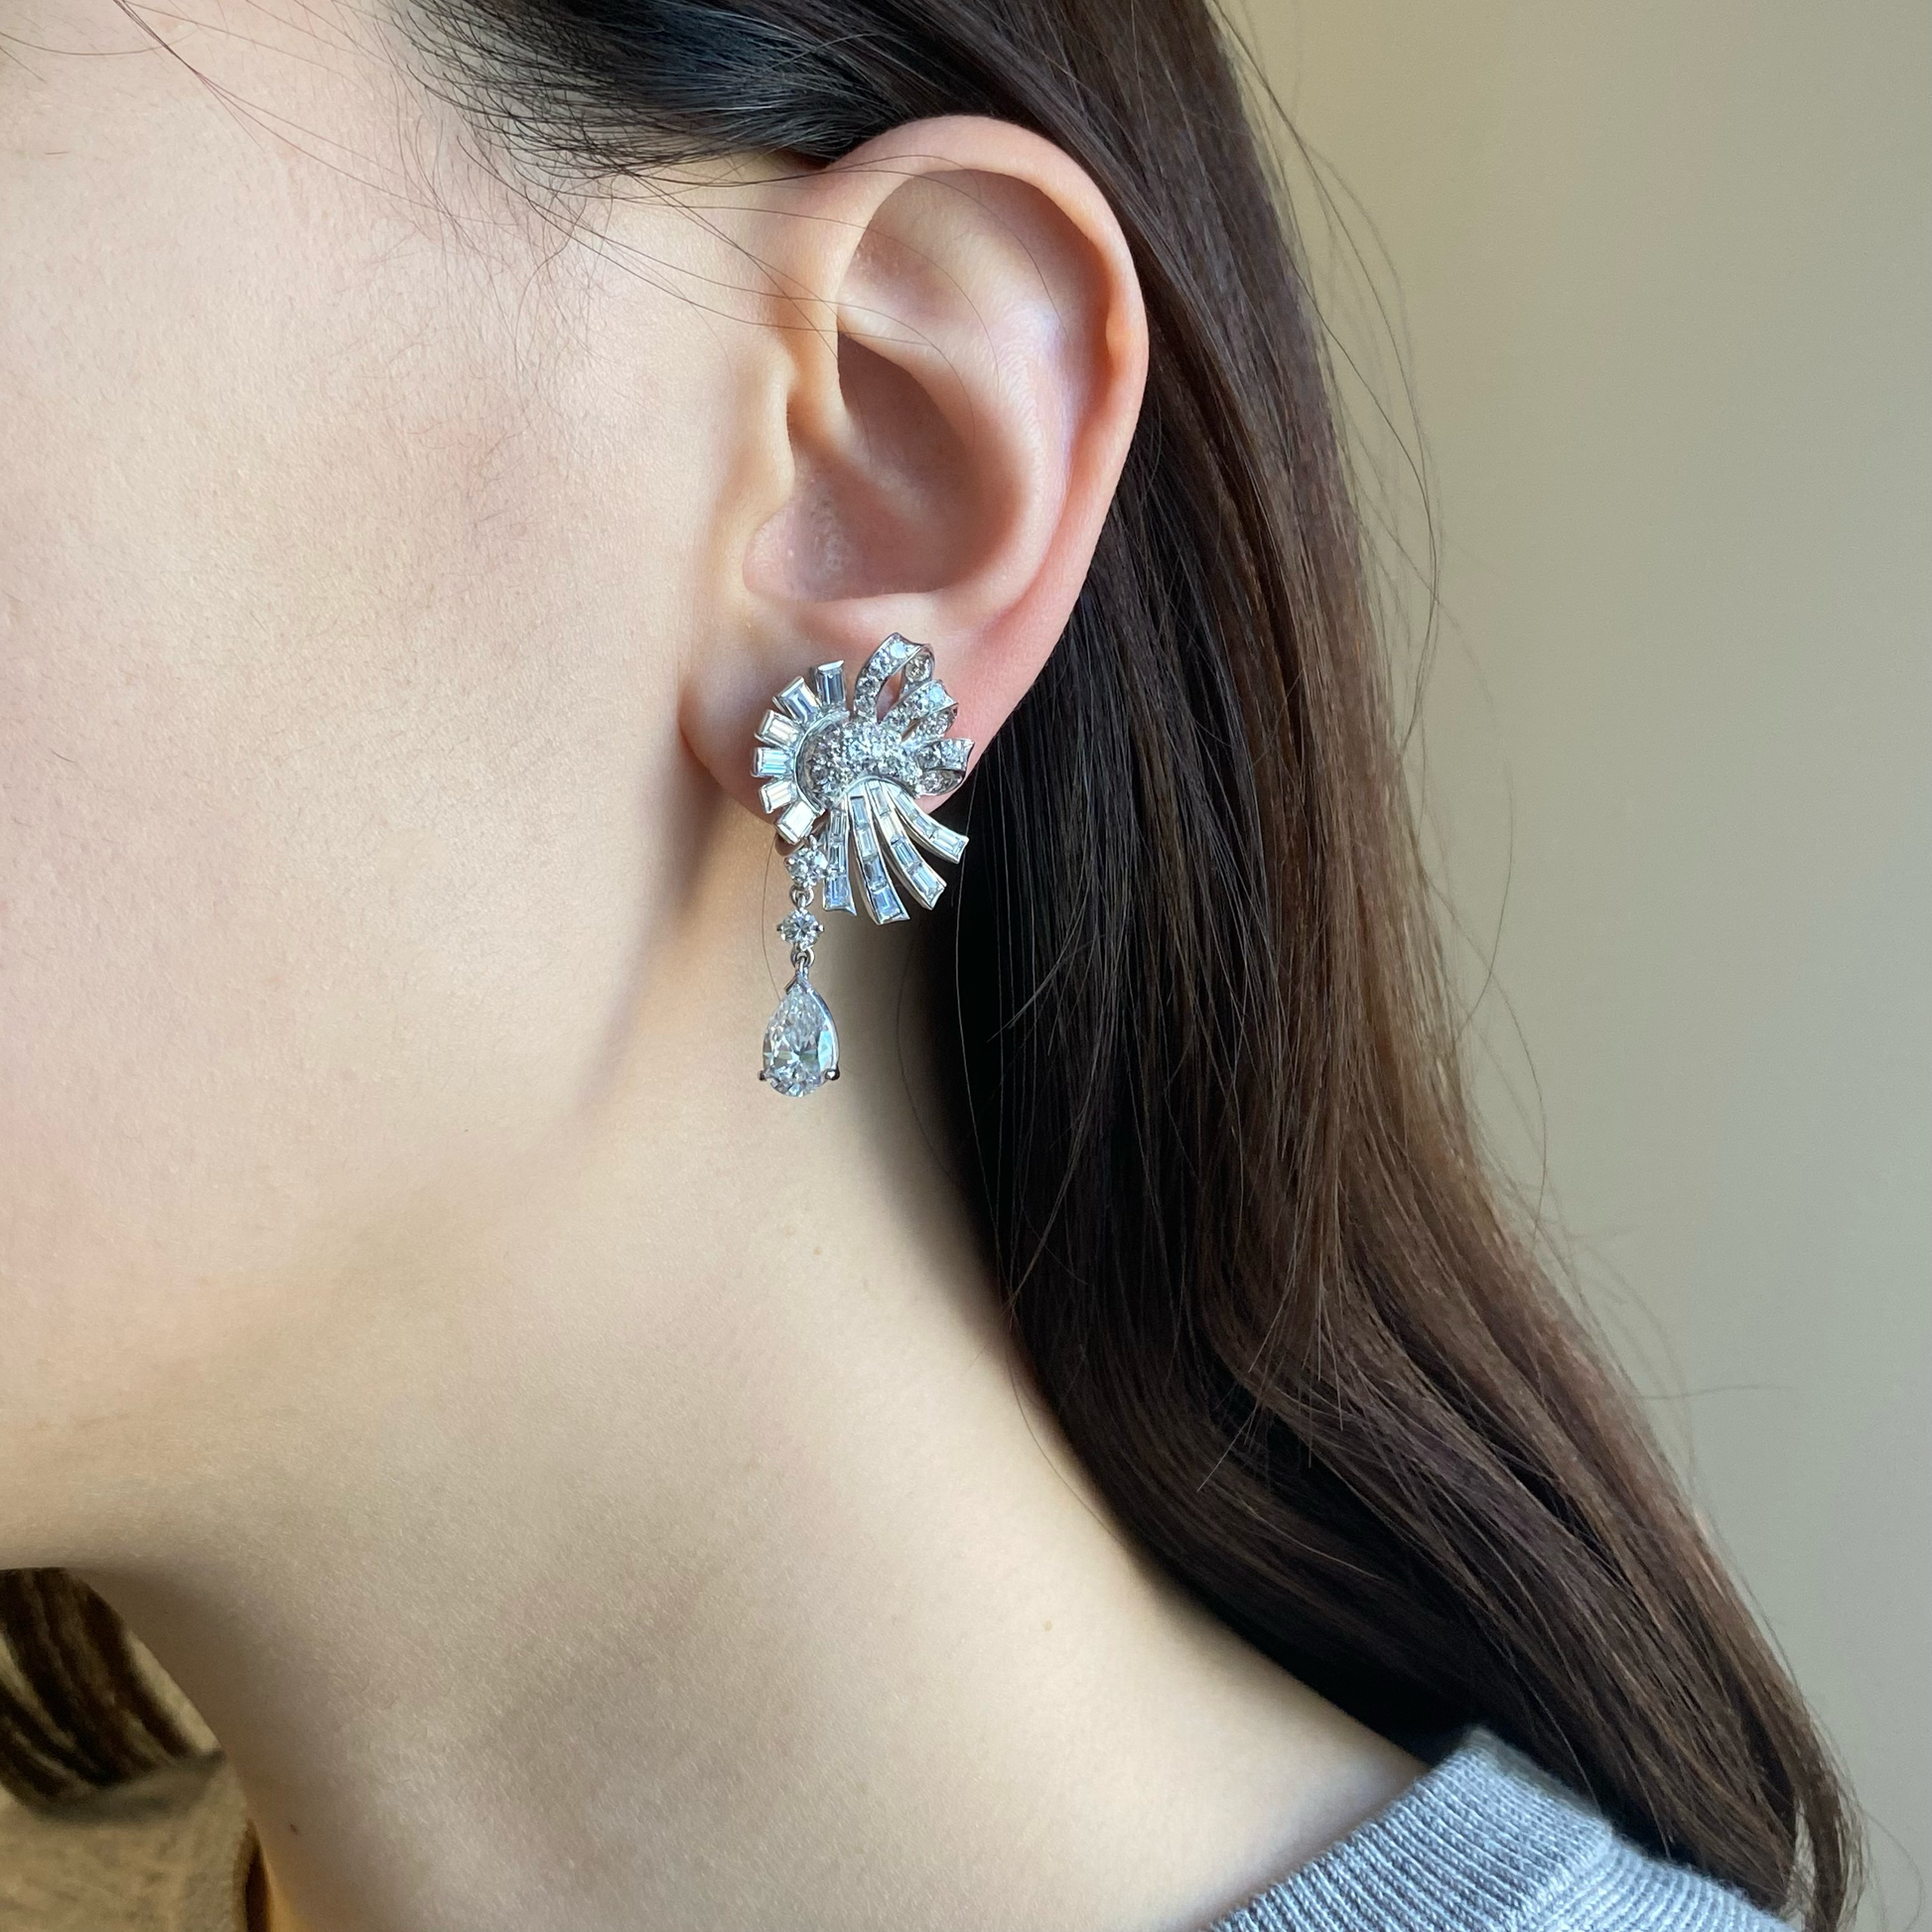 1950s Platinum Diamond Earrings worn on ear